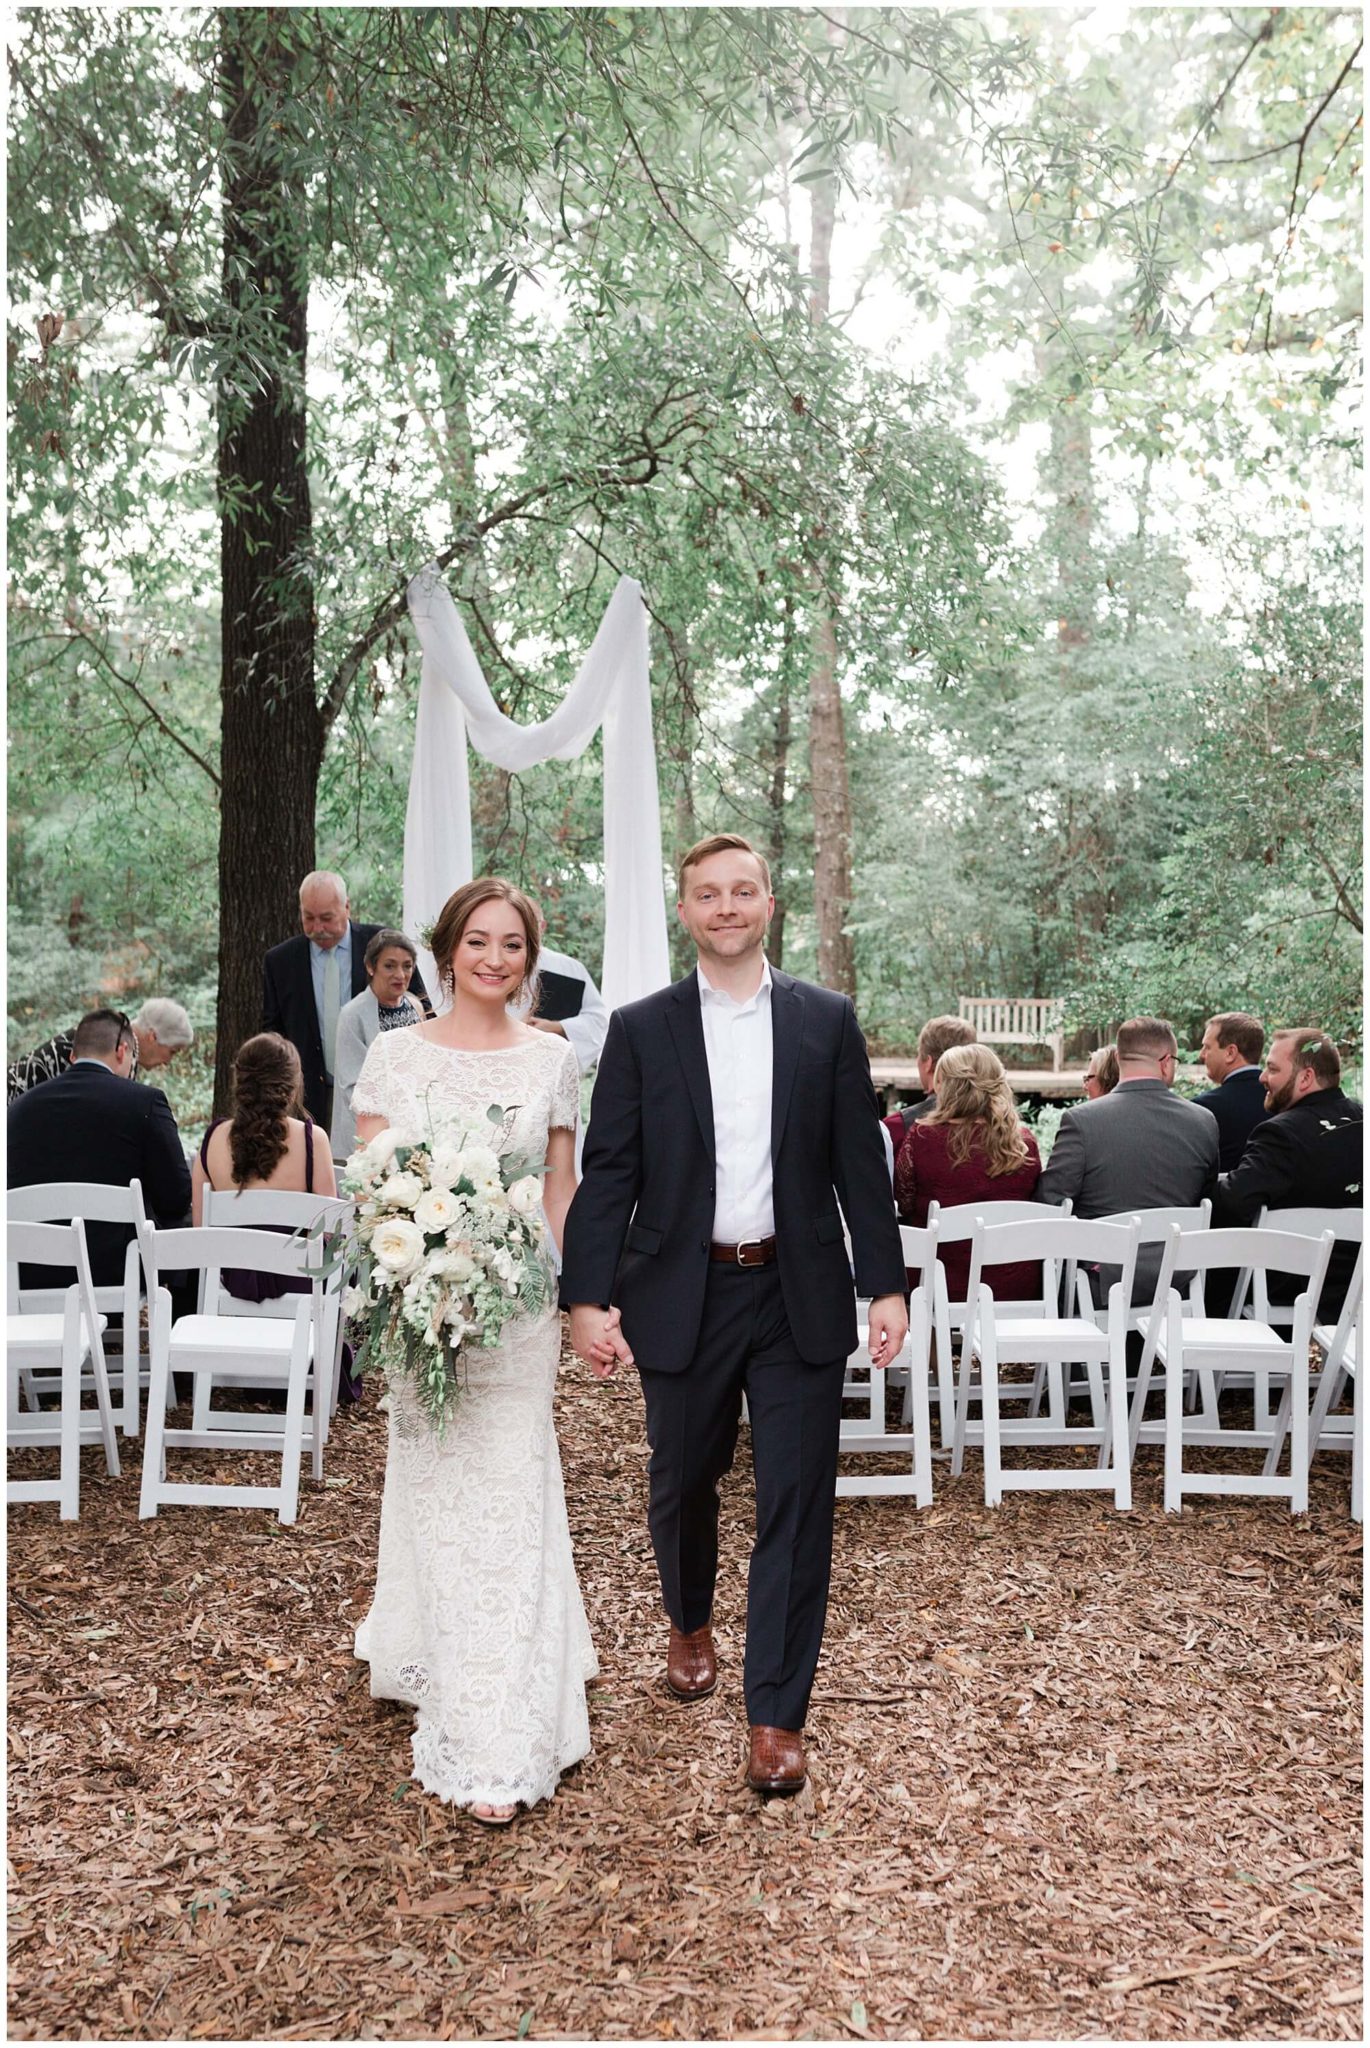 wedding ceremony at the Houston Arboretum in Houston Texas by wedding photographer Swish and Click